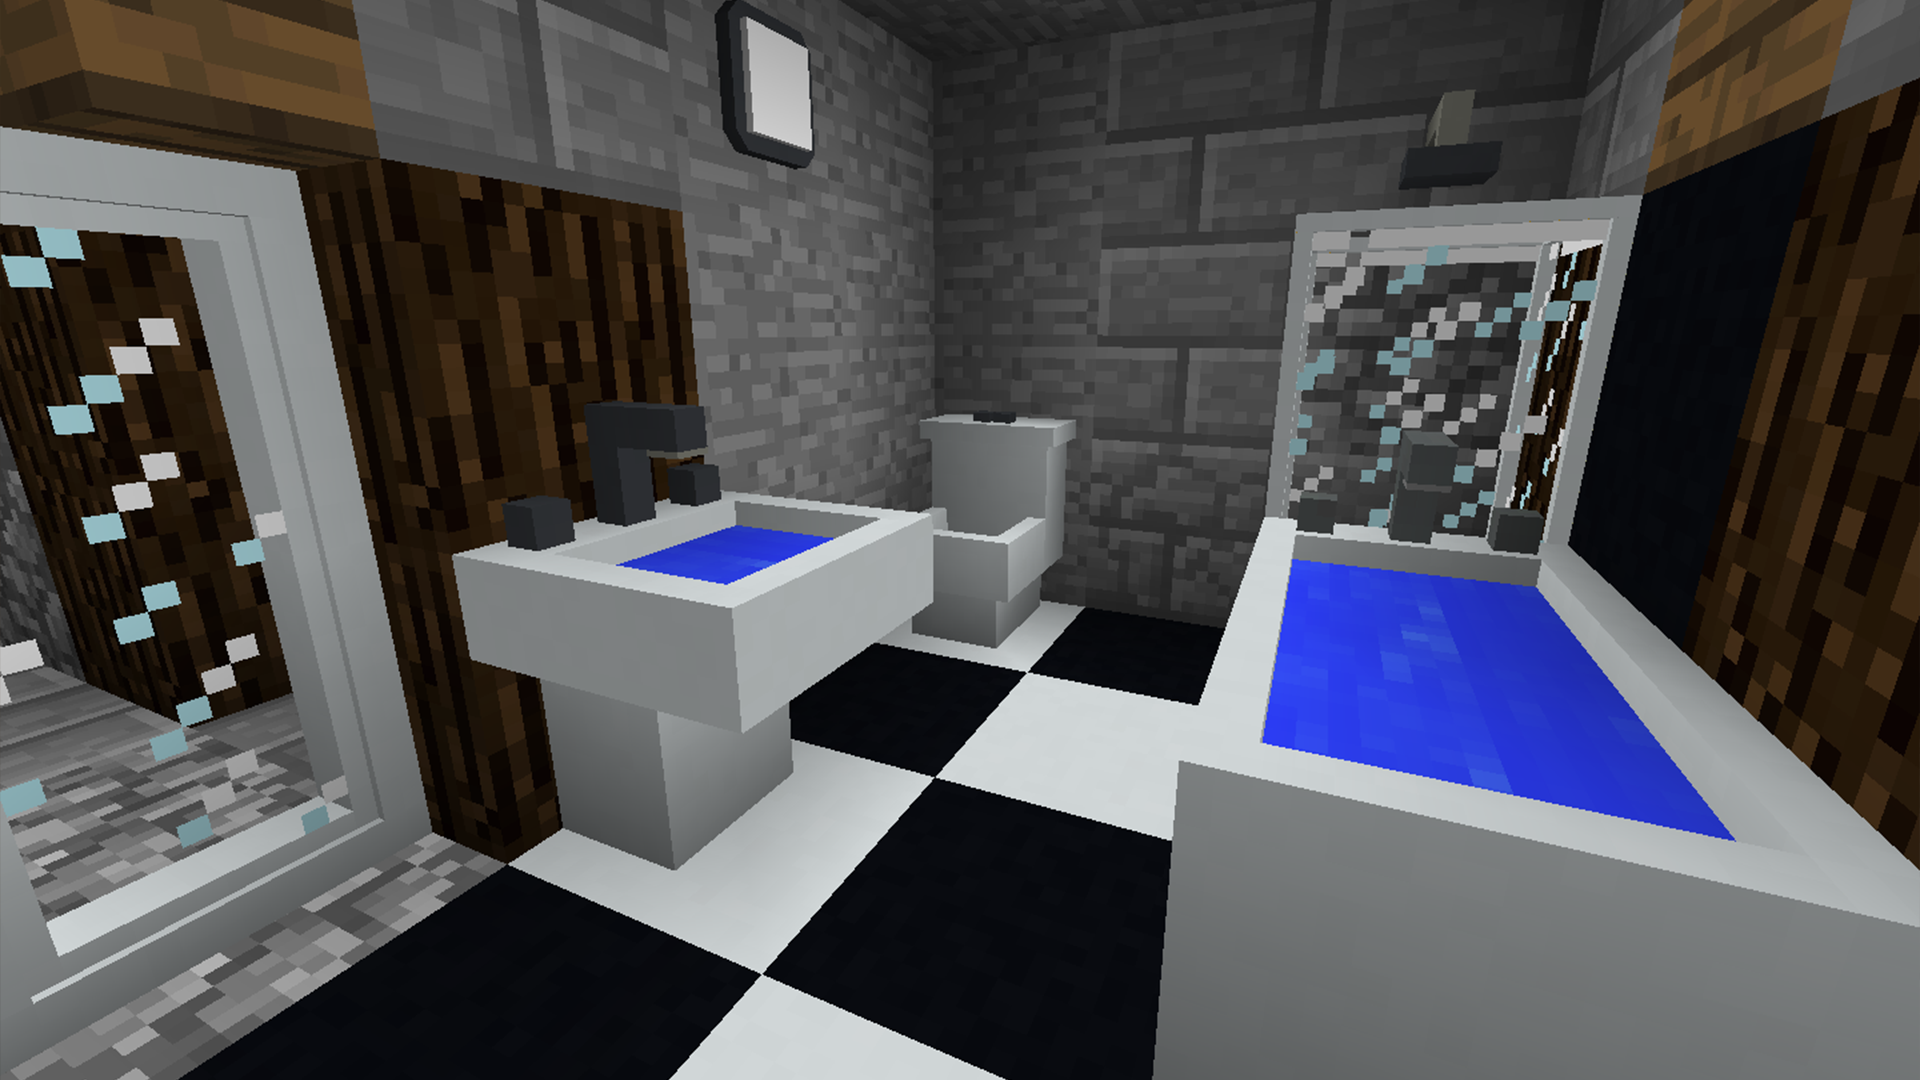 Minecraft 1.12.2 Mod мебель. Мод на мебель в майнкрафт 1.12.2. Мебель для МАЙНКРАФТА 1.16.5. Mr Crayfish Furniture Mod 1.12.2 кран. Мод майнкрафт скибиди туалеты 1.12 2